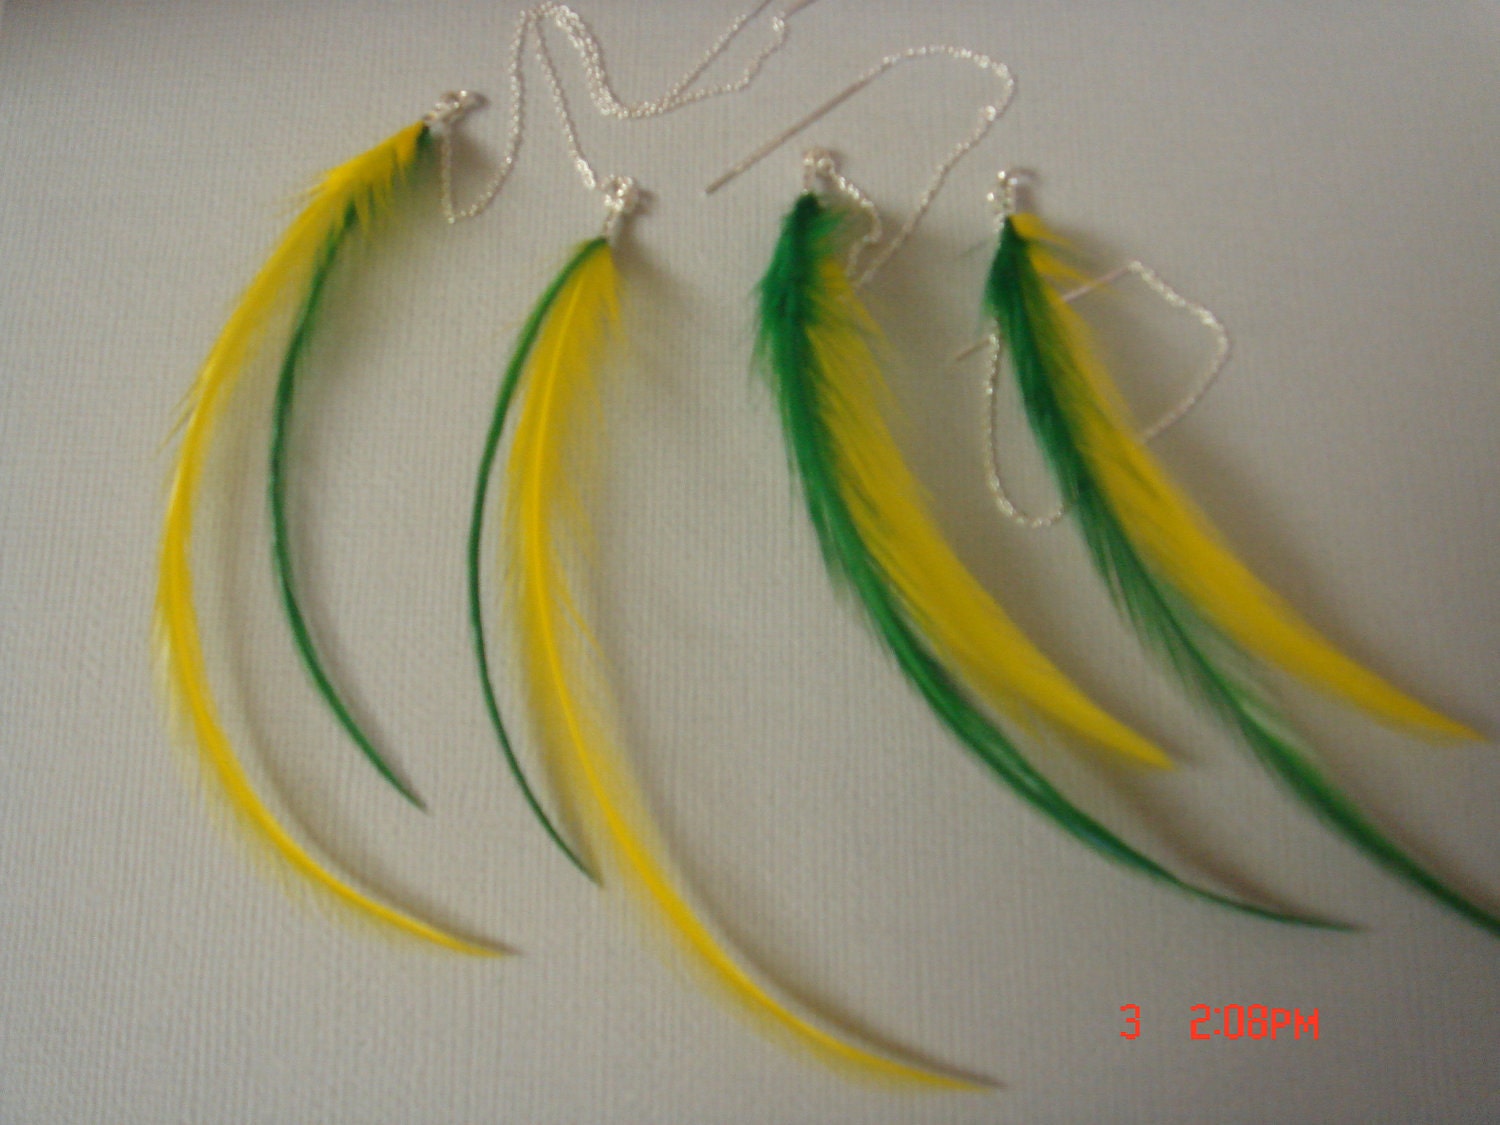 oregon ducks feathers